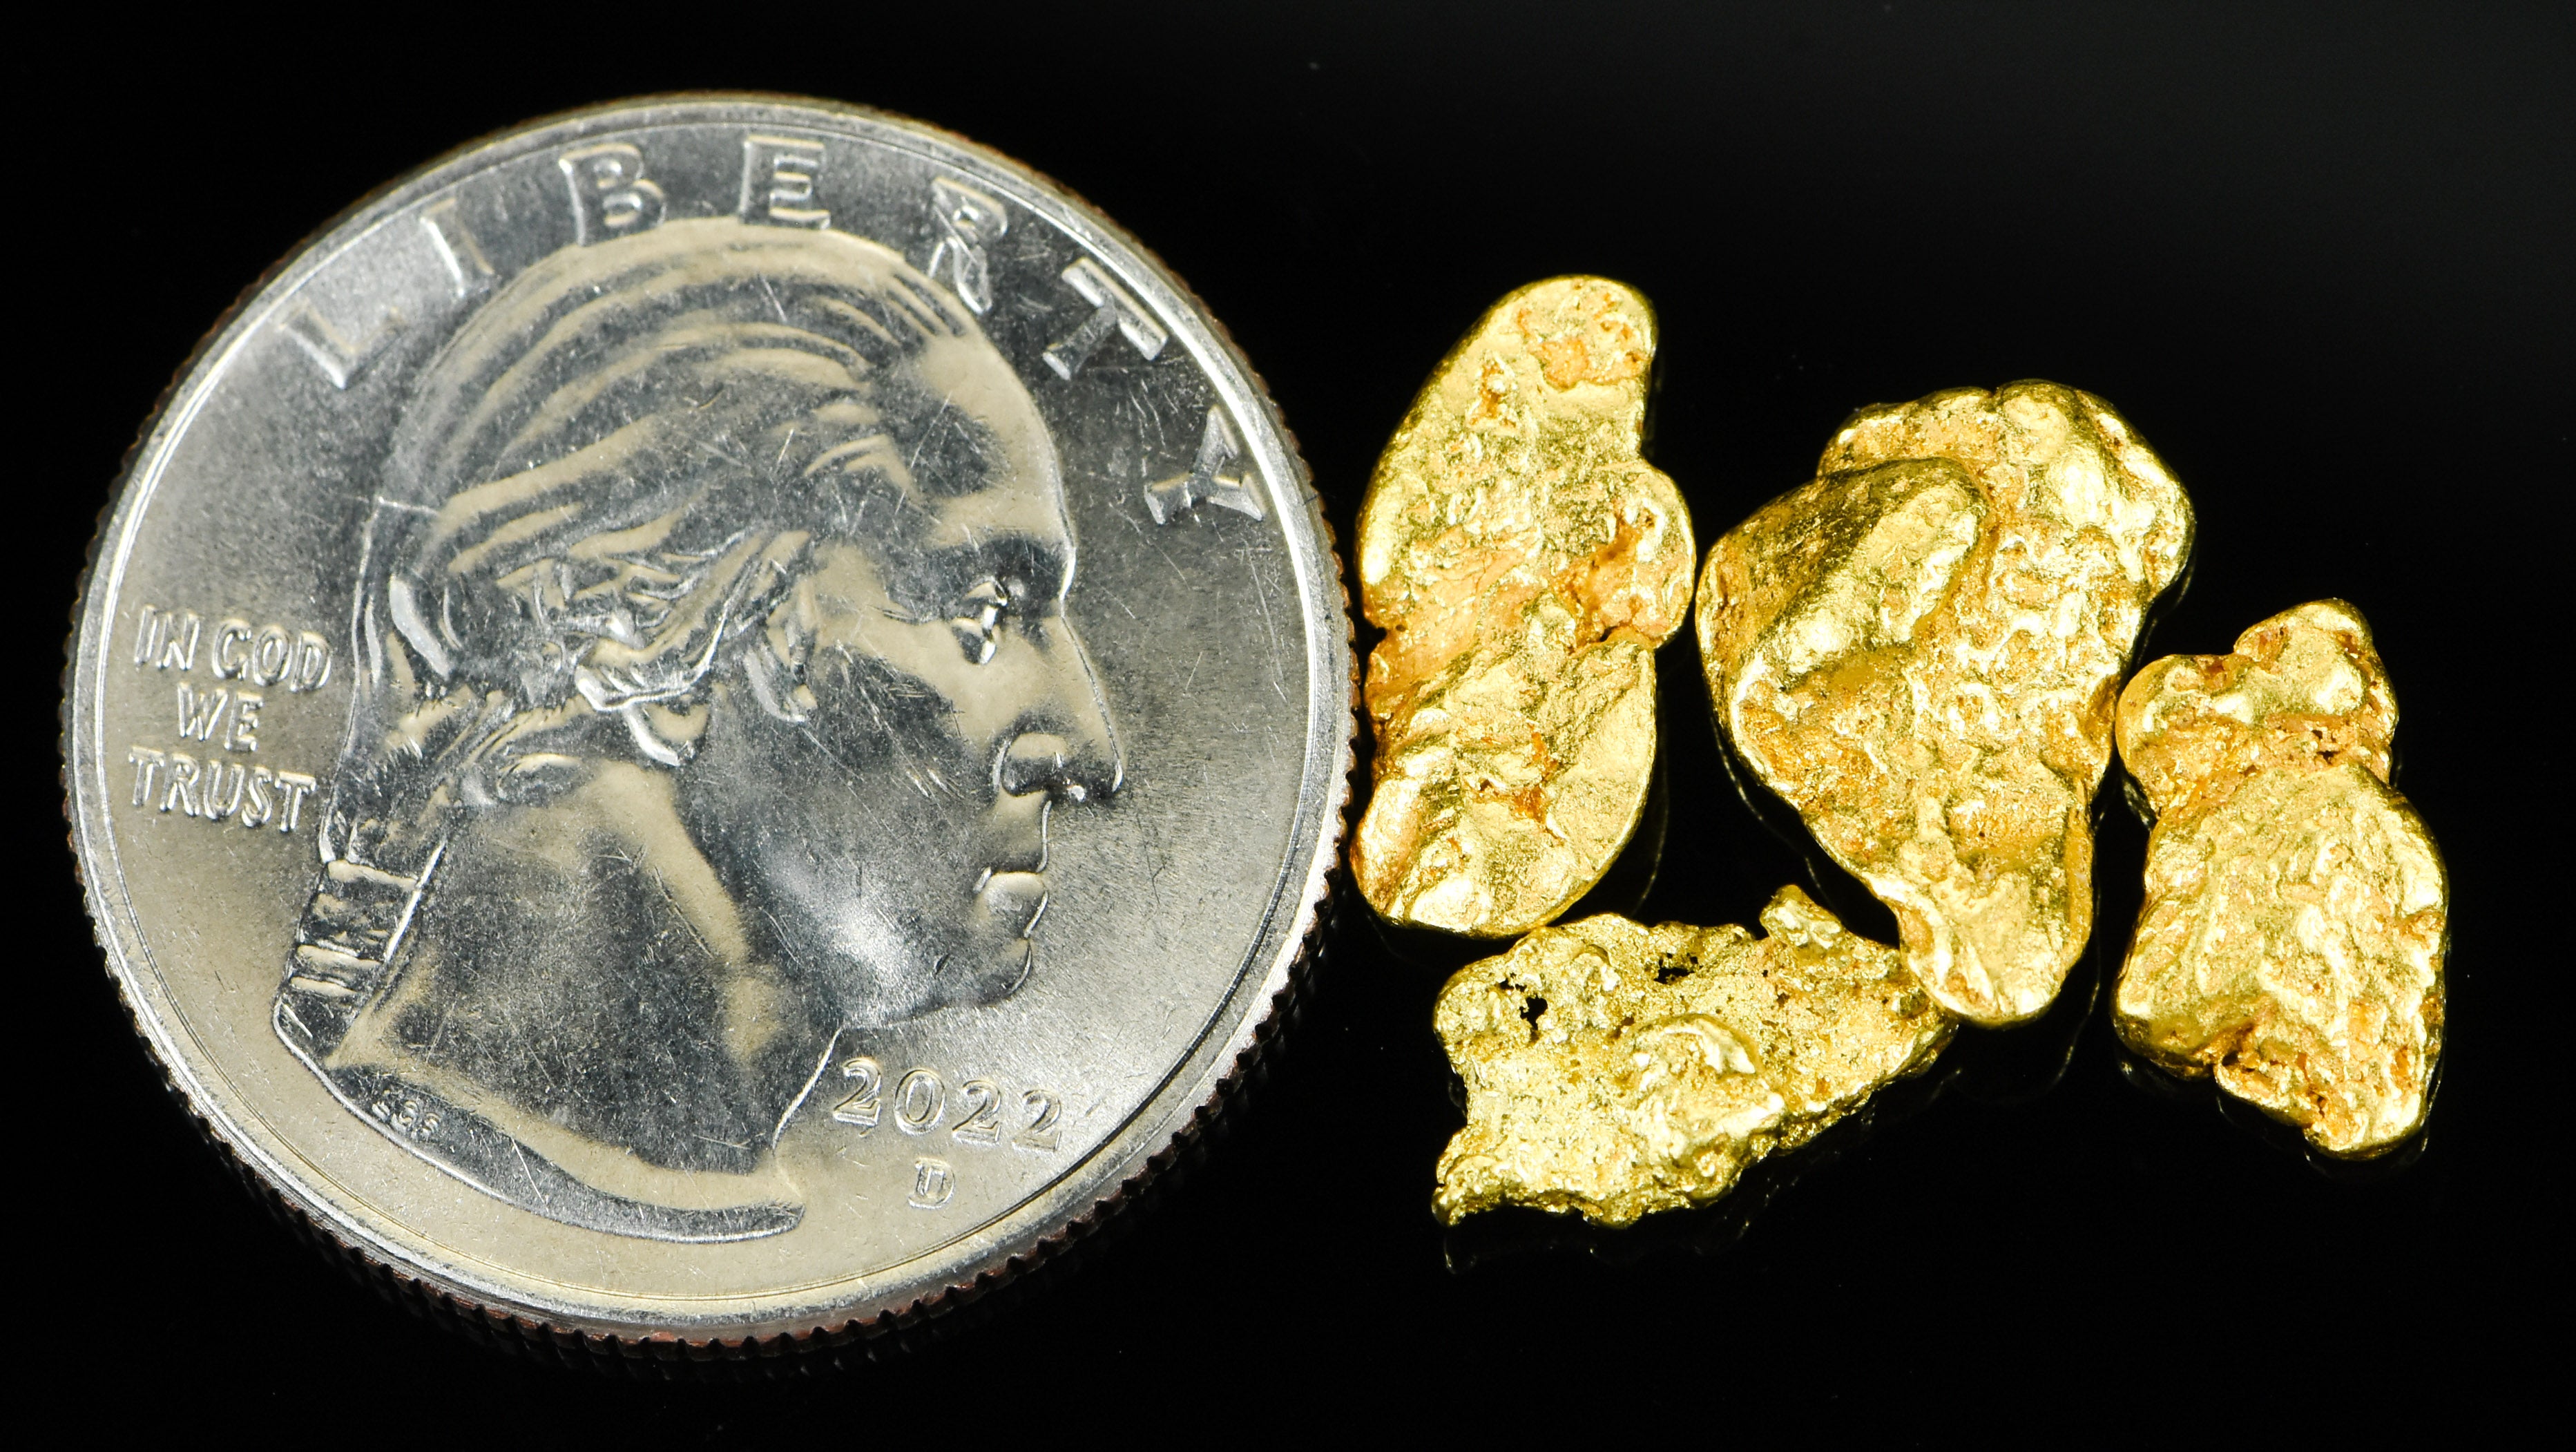 Alaskan-Yukon BC Natural Gold Nugget #4 Mesh 5 Grams